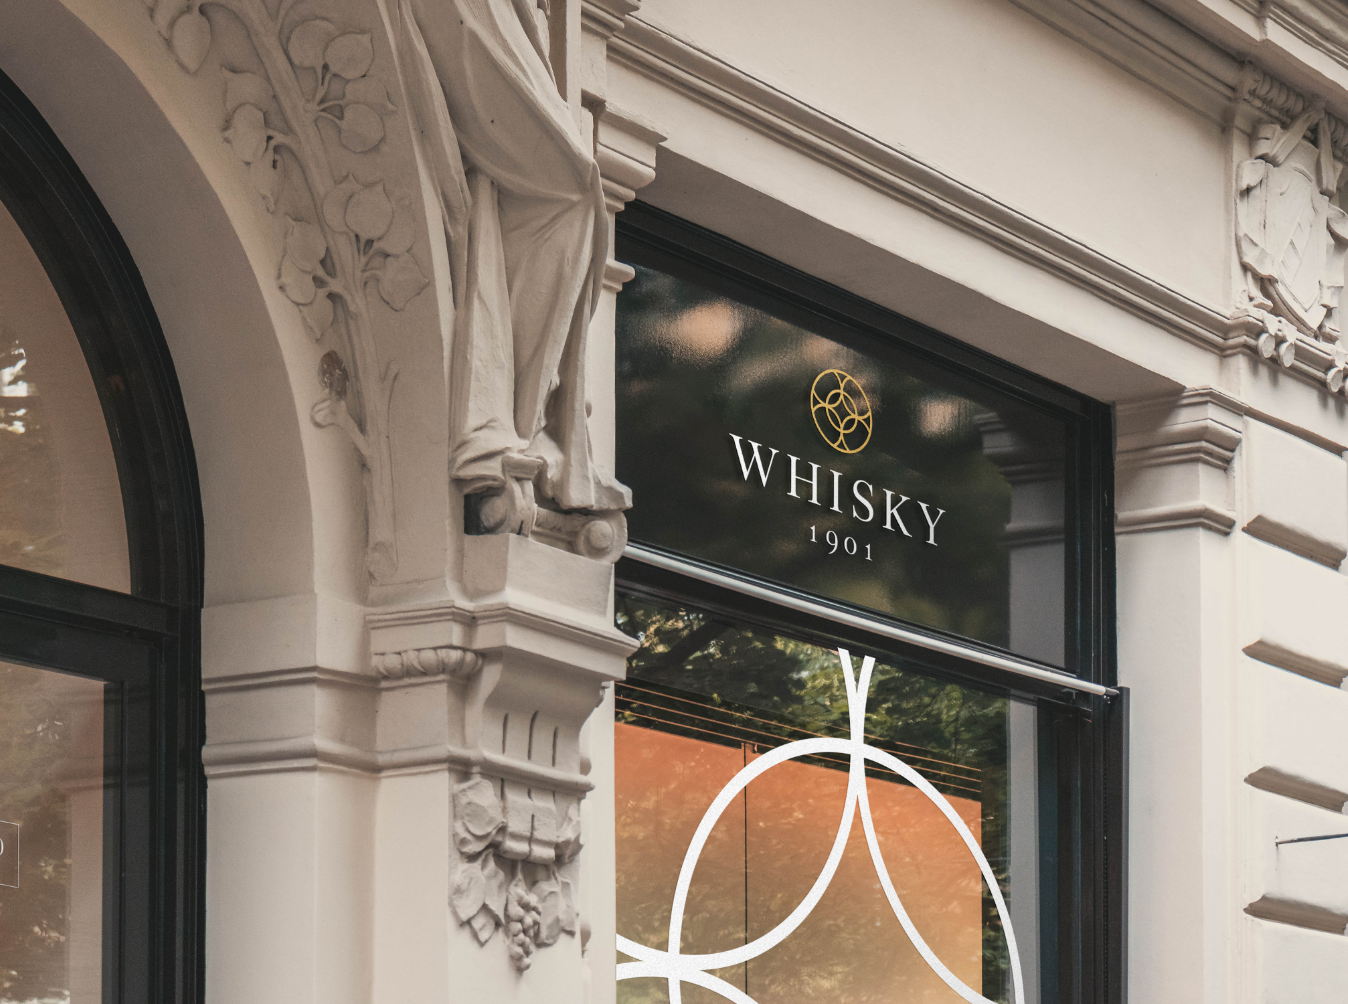 Whisky 1901 window